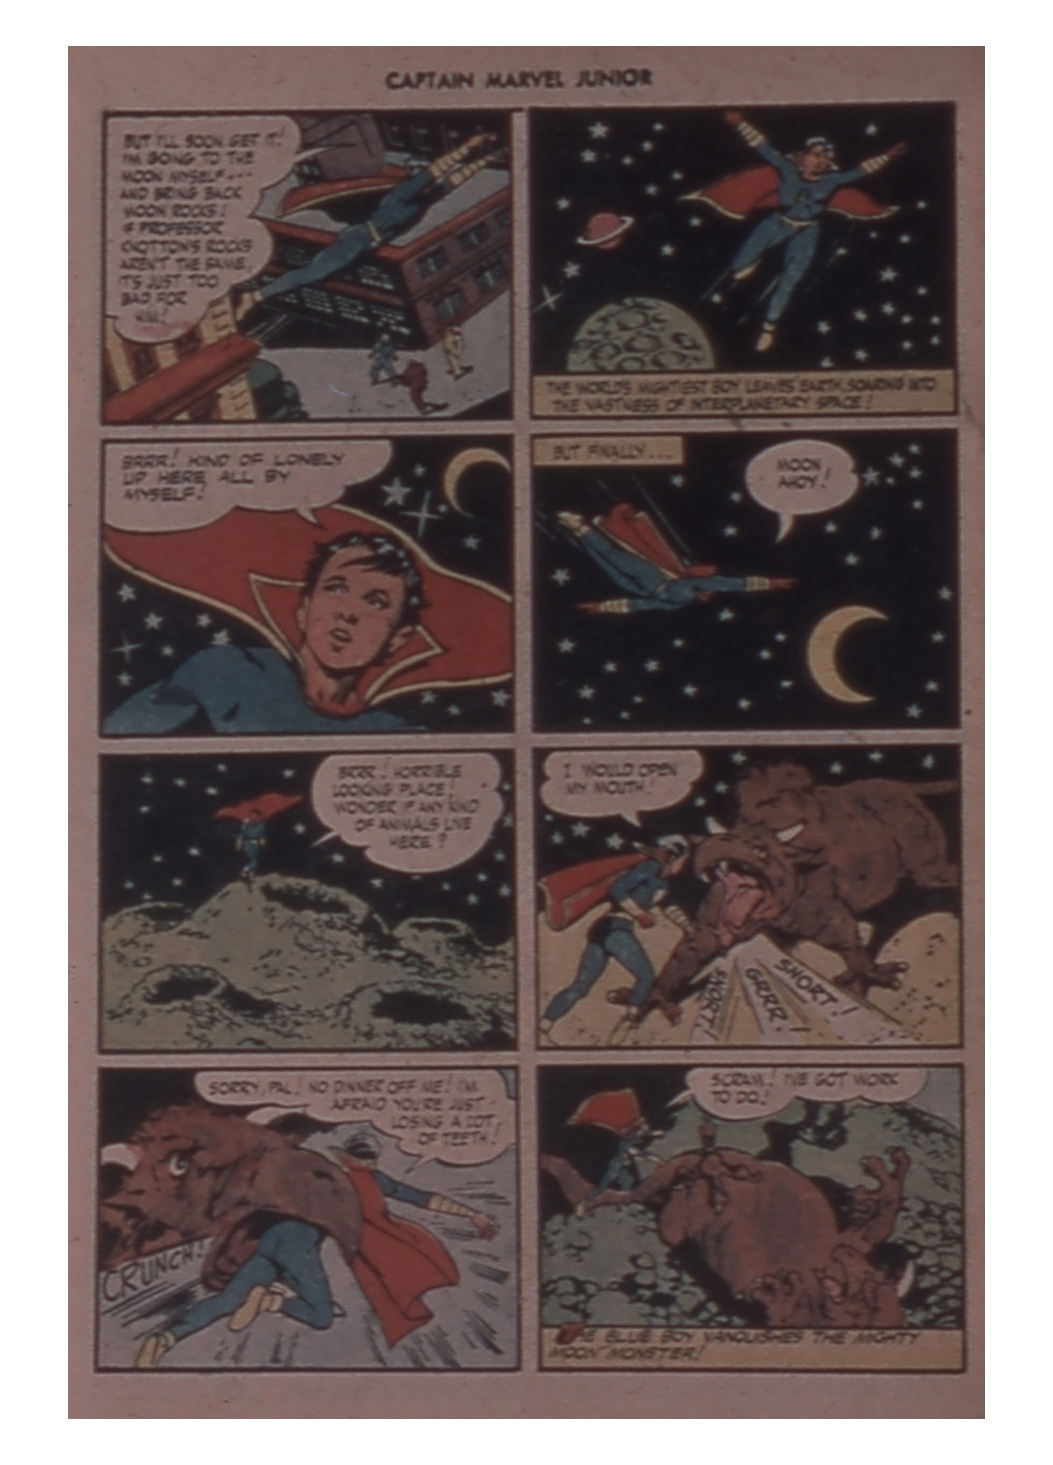 Read online Captain Marvel, Jr. comic -  Issue #28 - 28